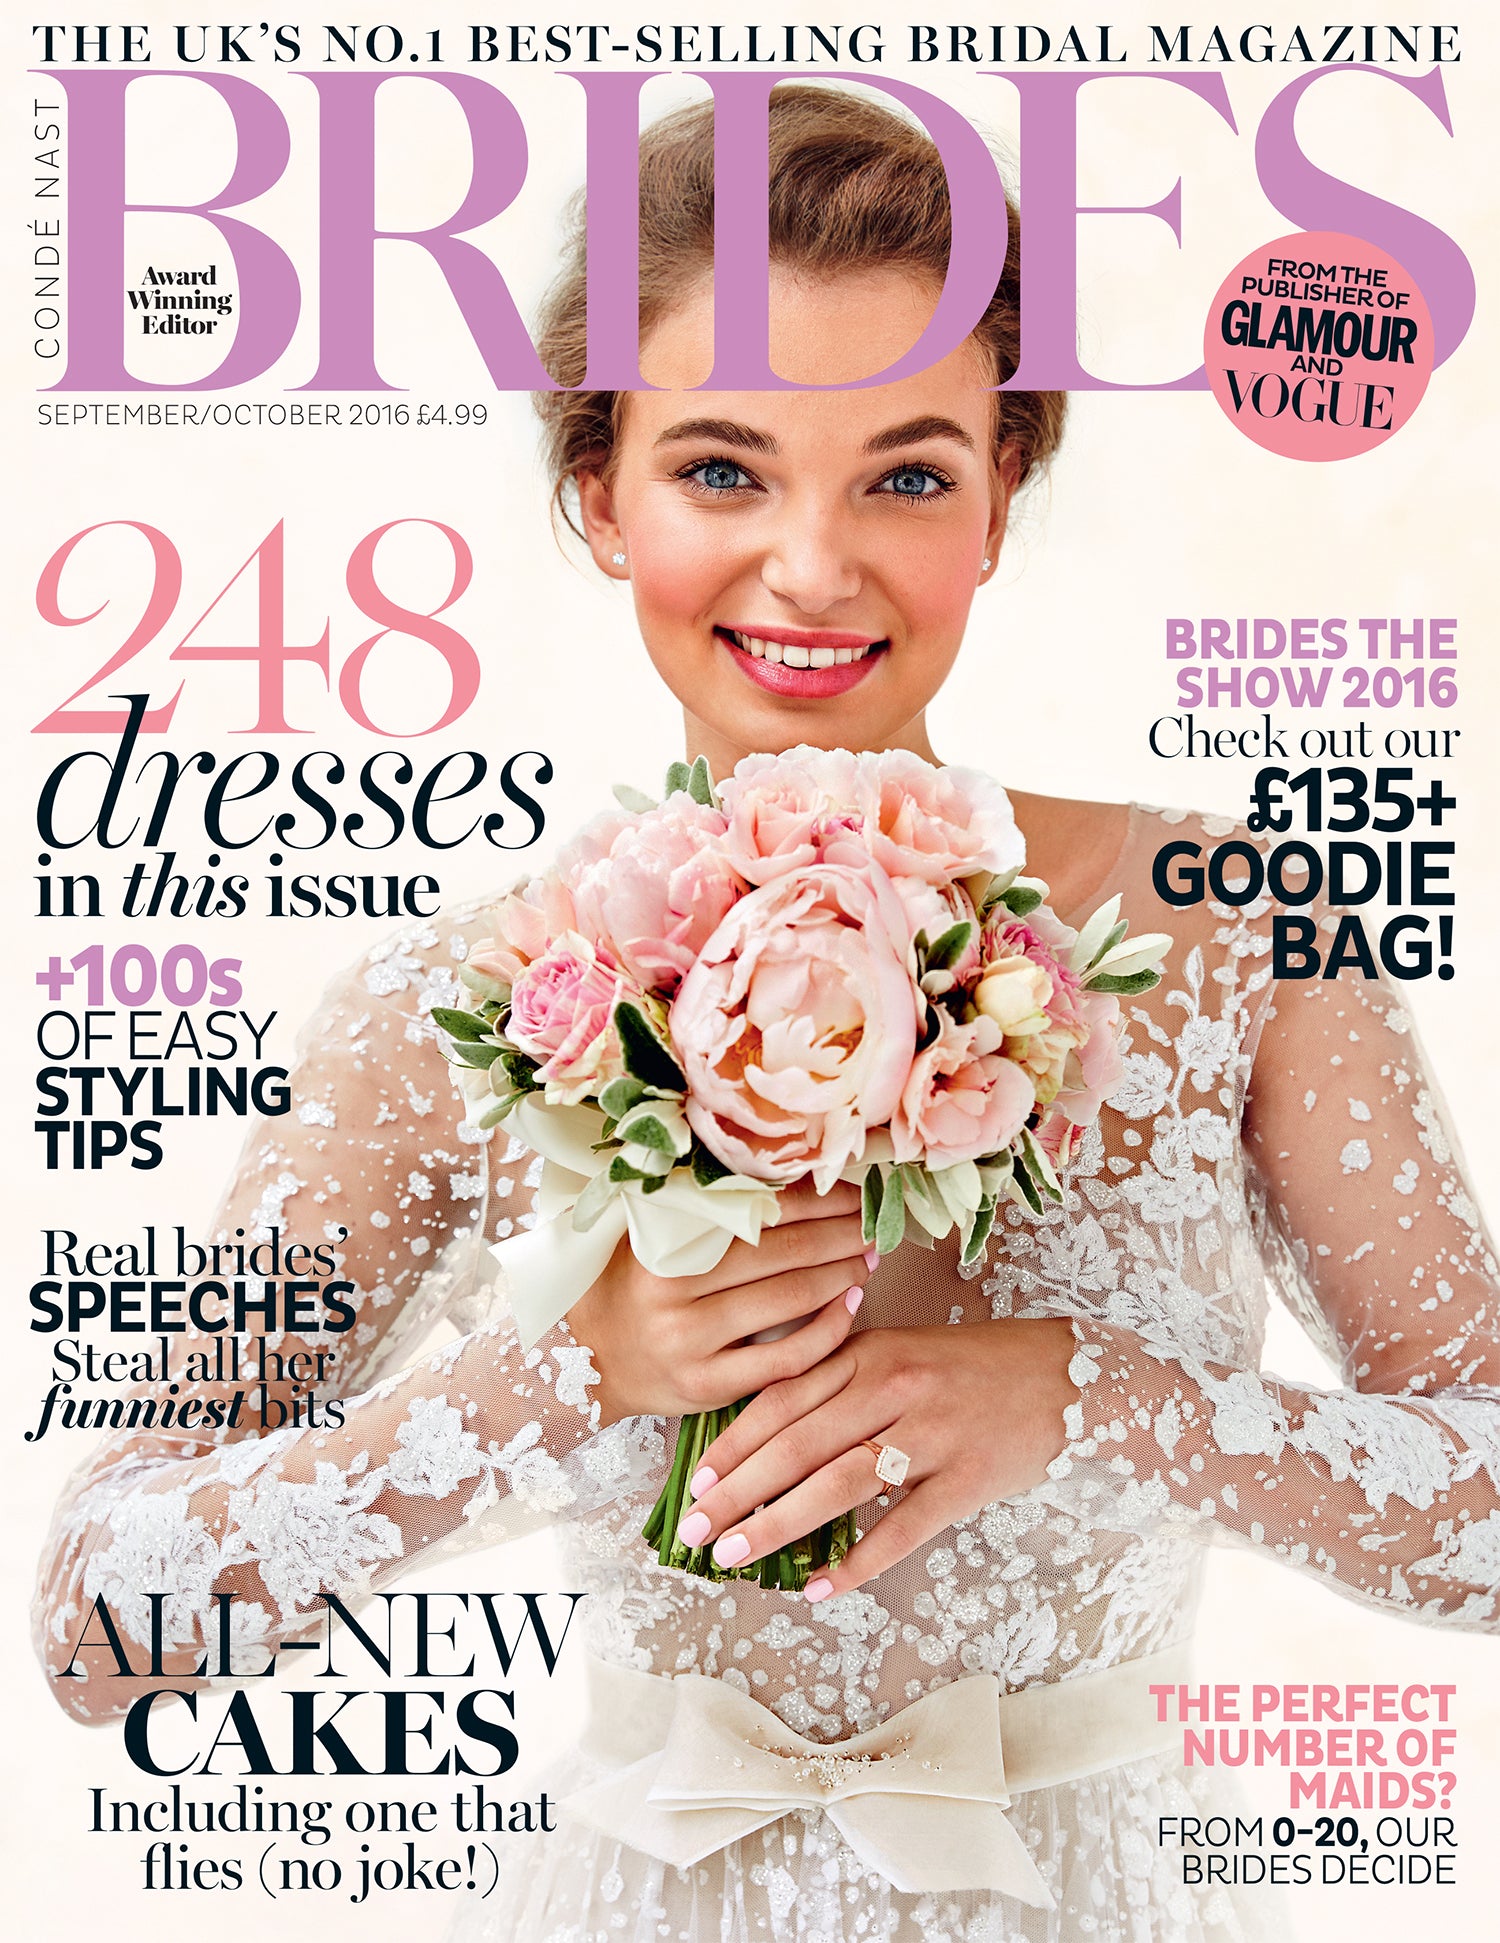 Brides UK cover designer wedding dress by Caroline Castigliano